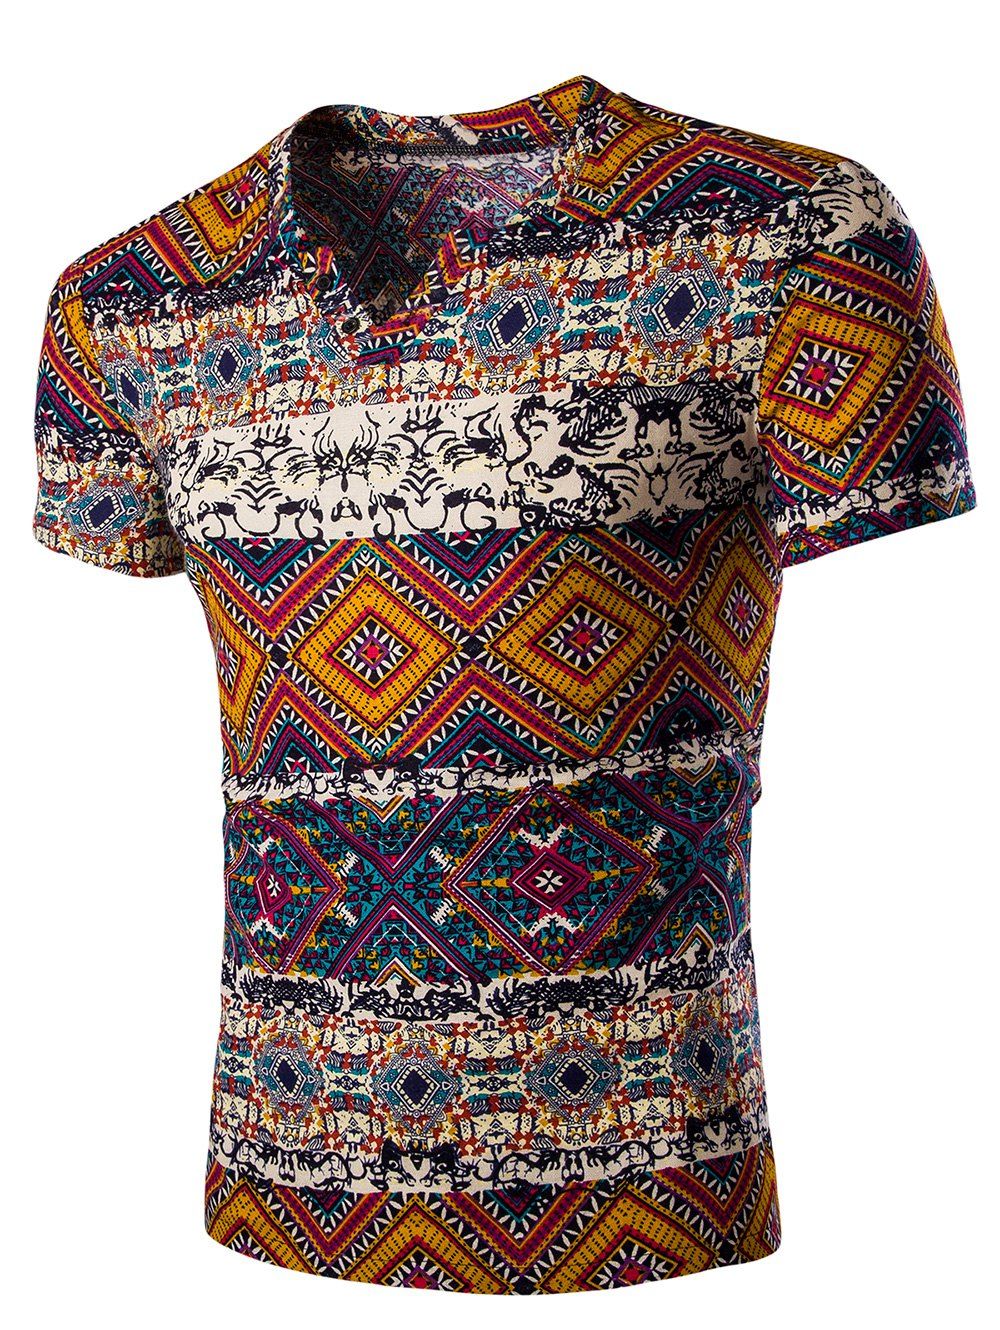 Shirts That Embrace Tribal Patterns - inchiostroscivoloso